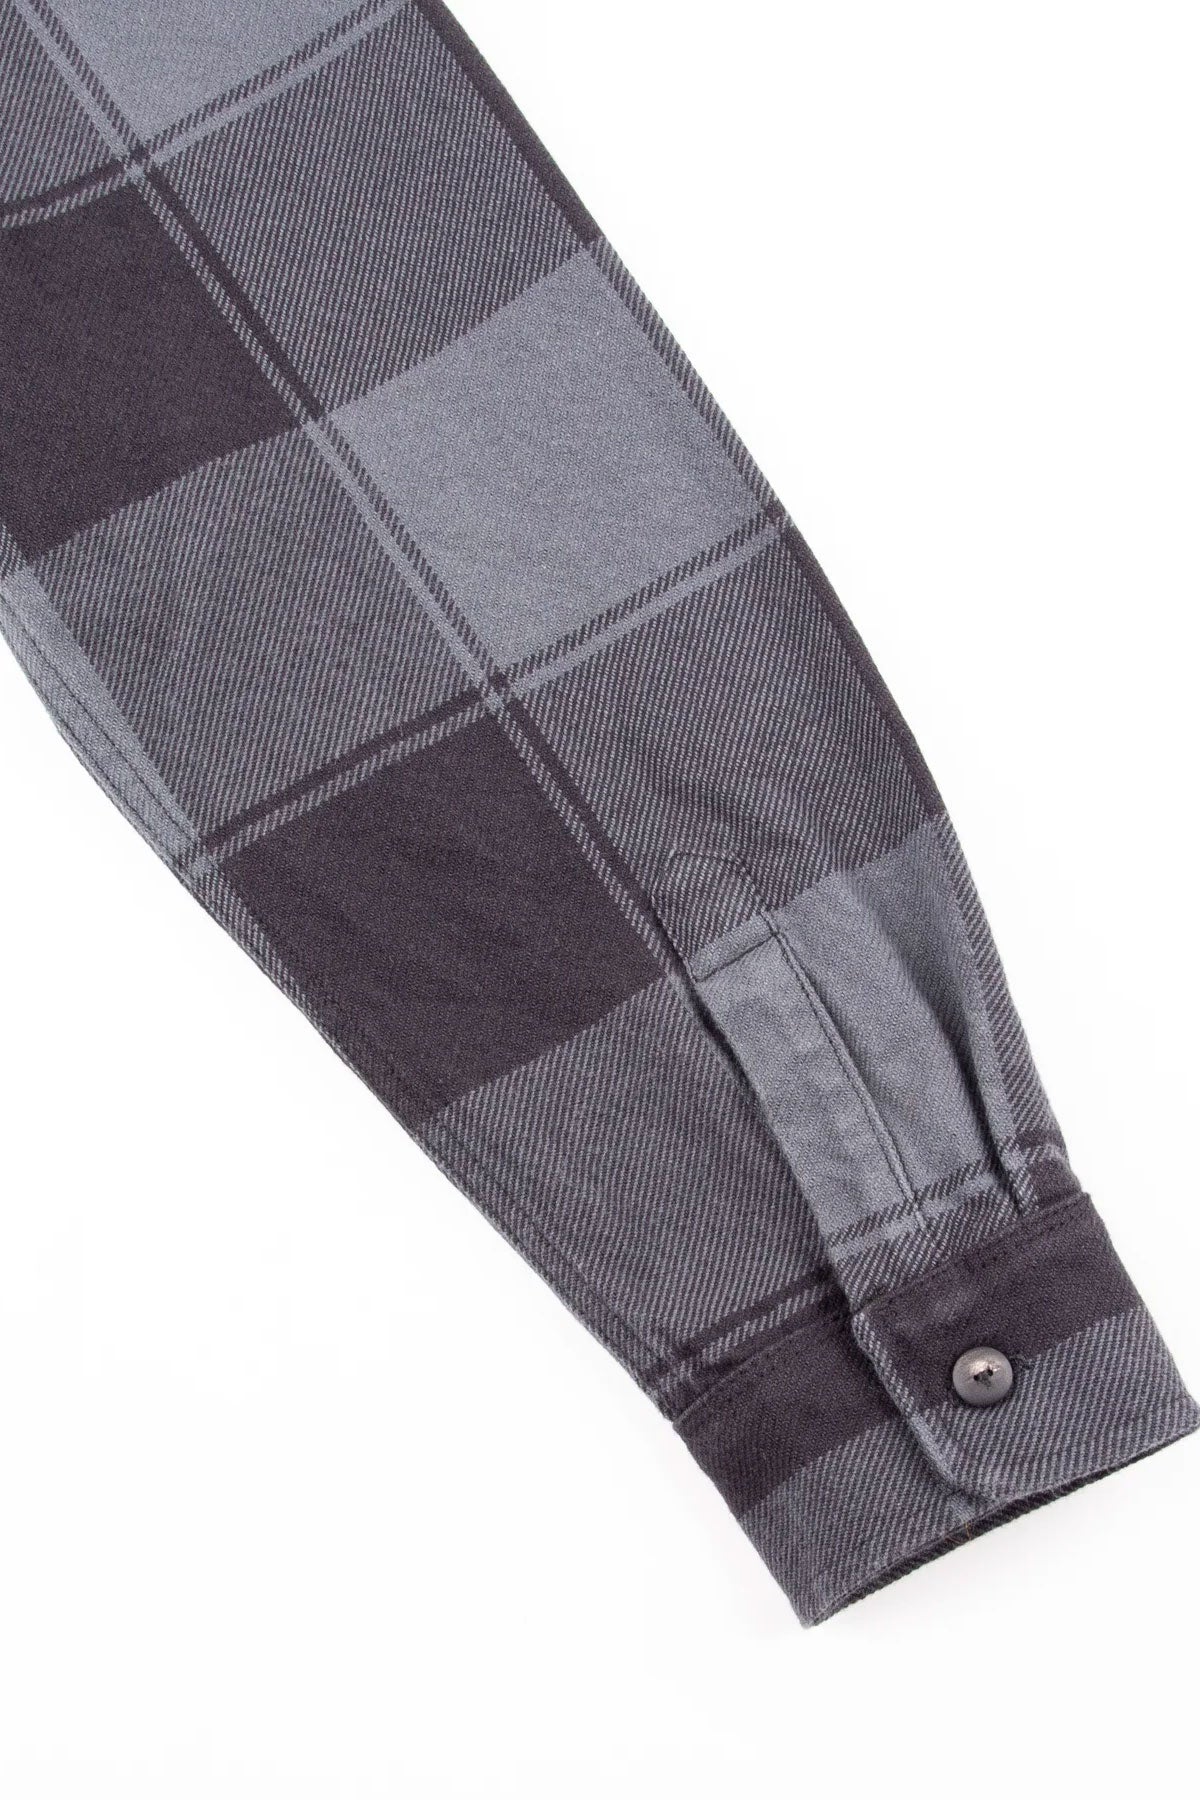 Freenote Cloth - Benson in Charcoal Buffalo Plaid